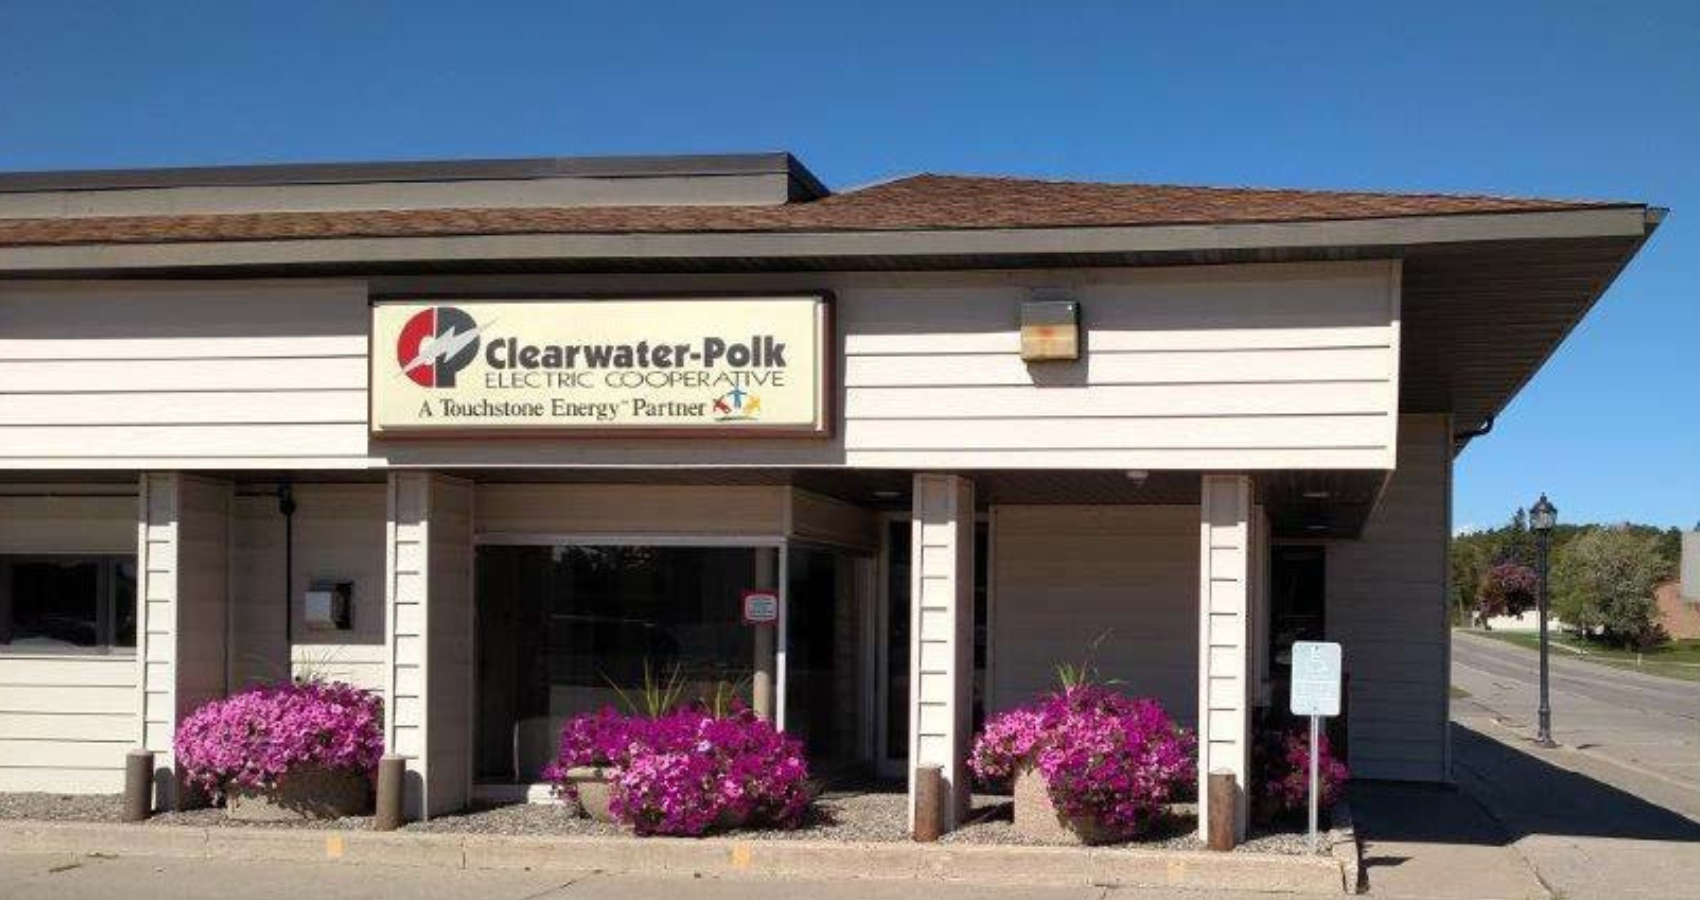 Clear water polk building